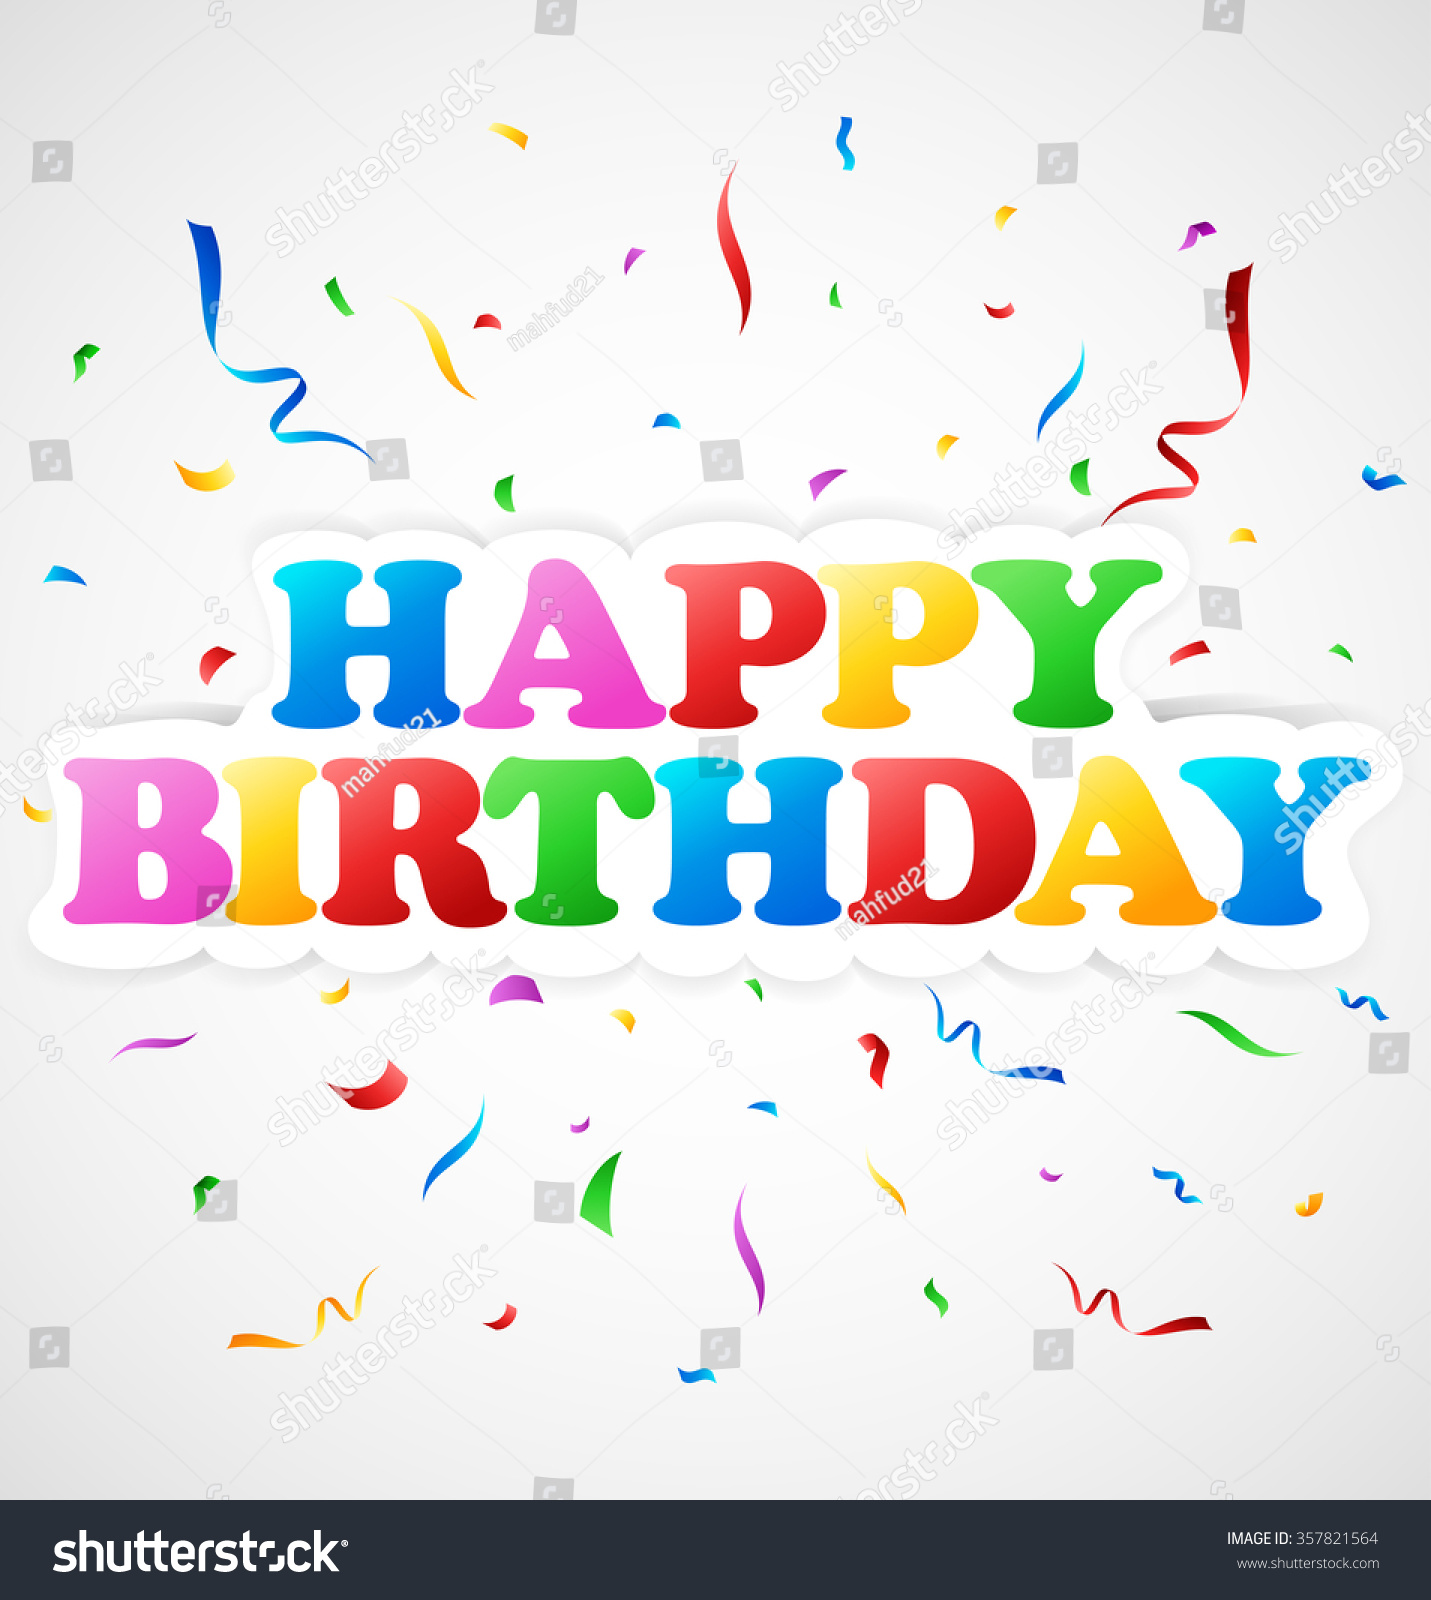 Happy Birthday Background Stock Vector 357821564 : Shutterstock